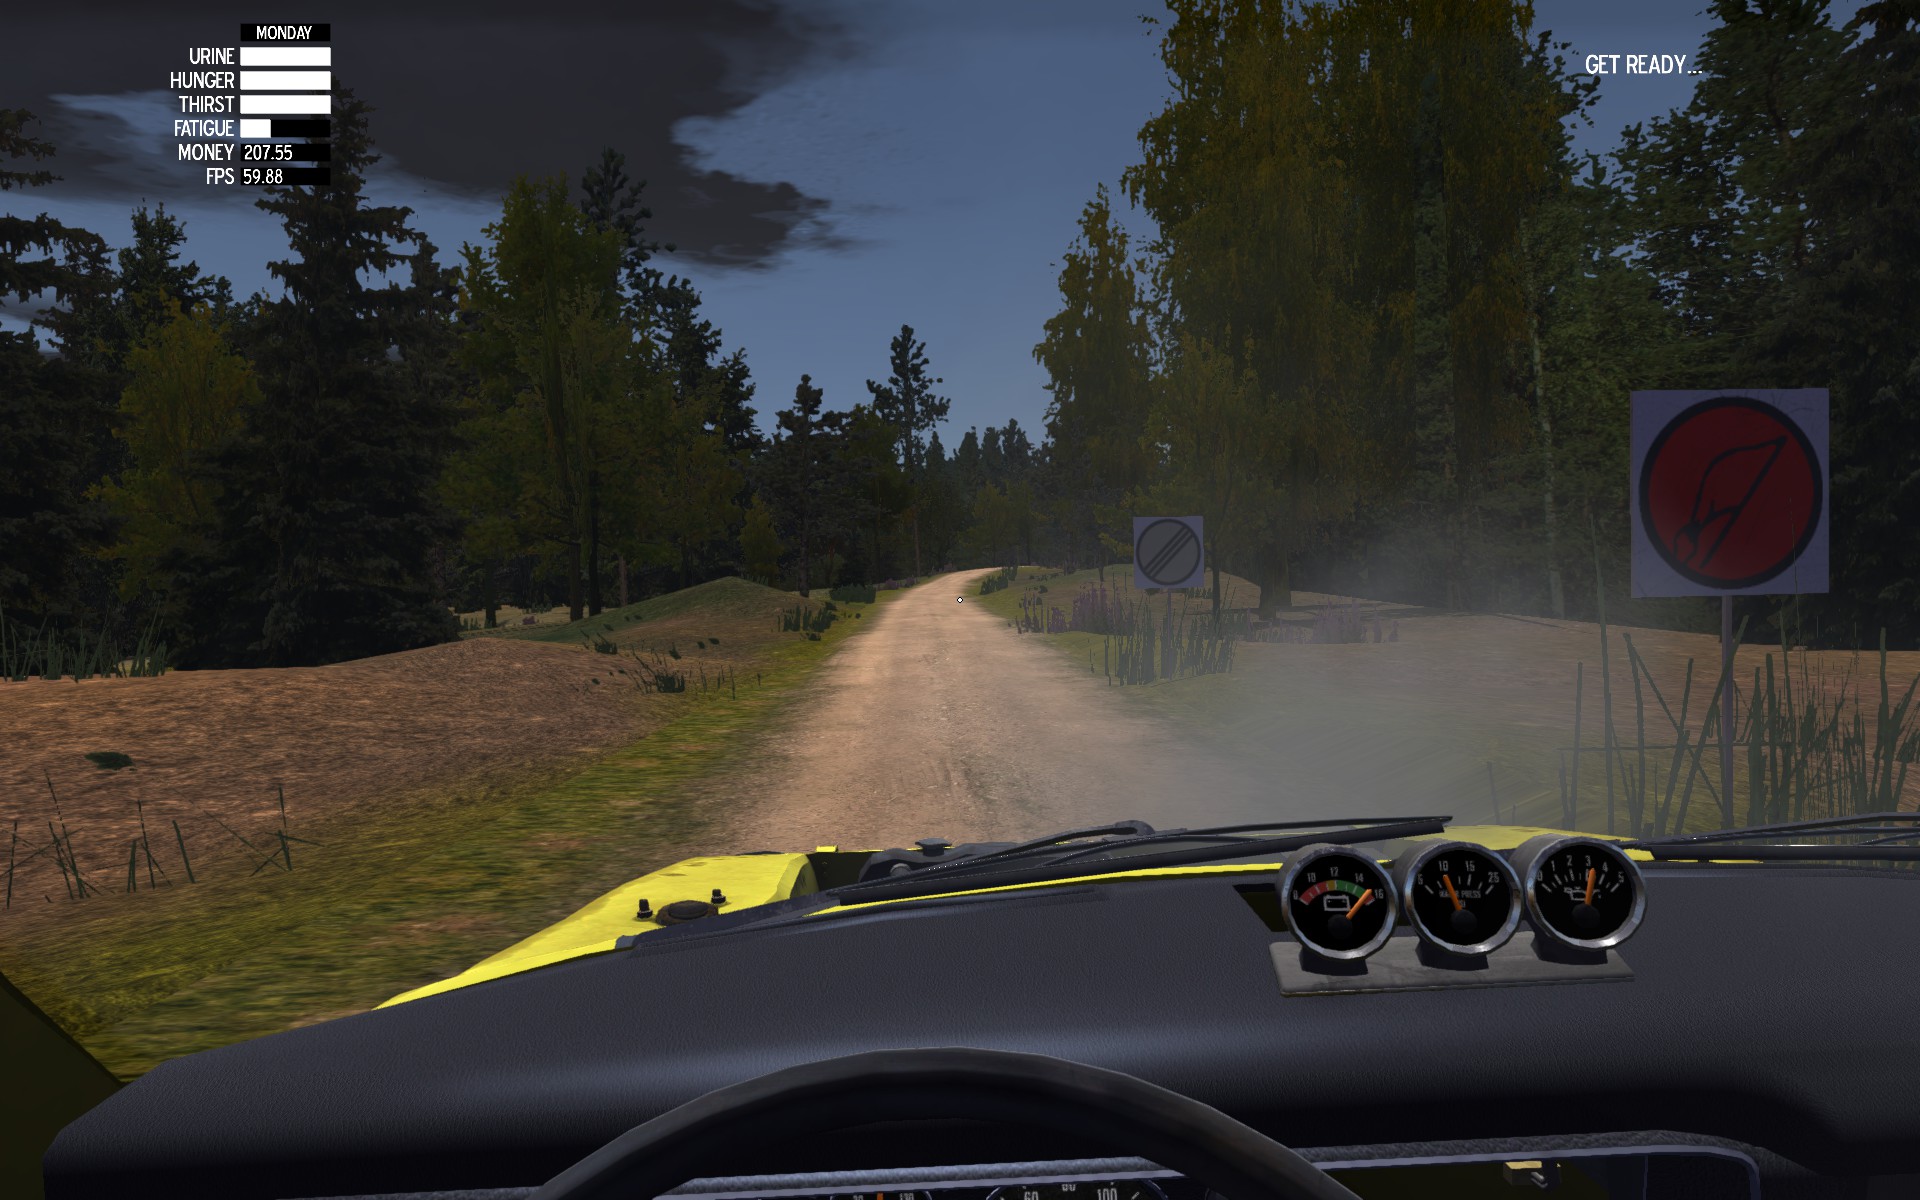 My Summer Car: the insane, annoying and awesome Finnish car simulator